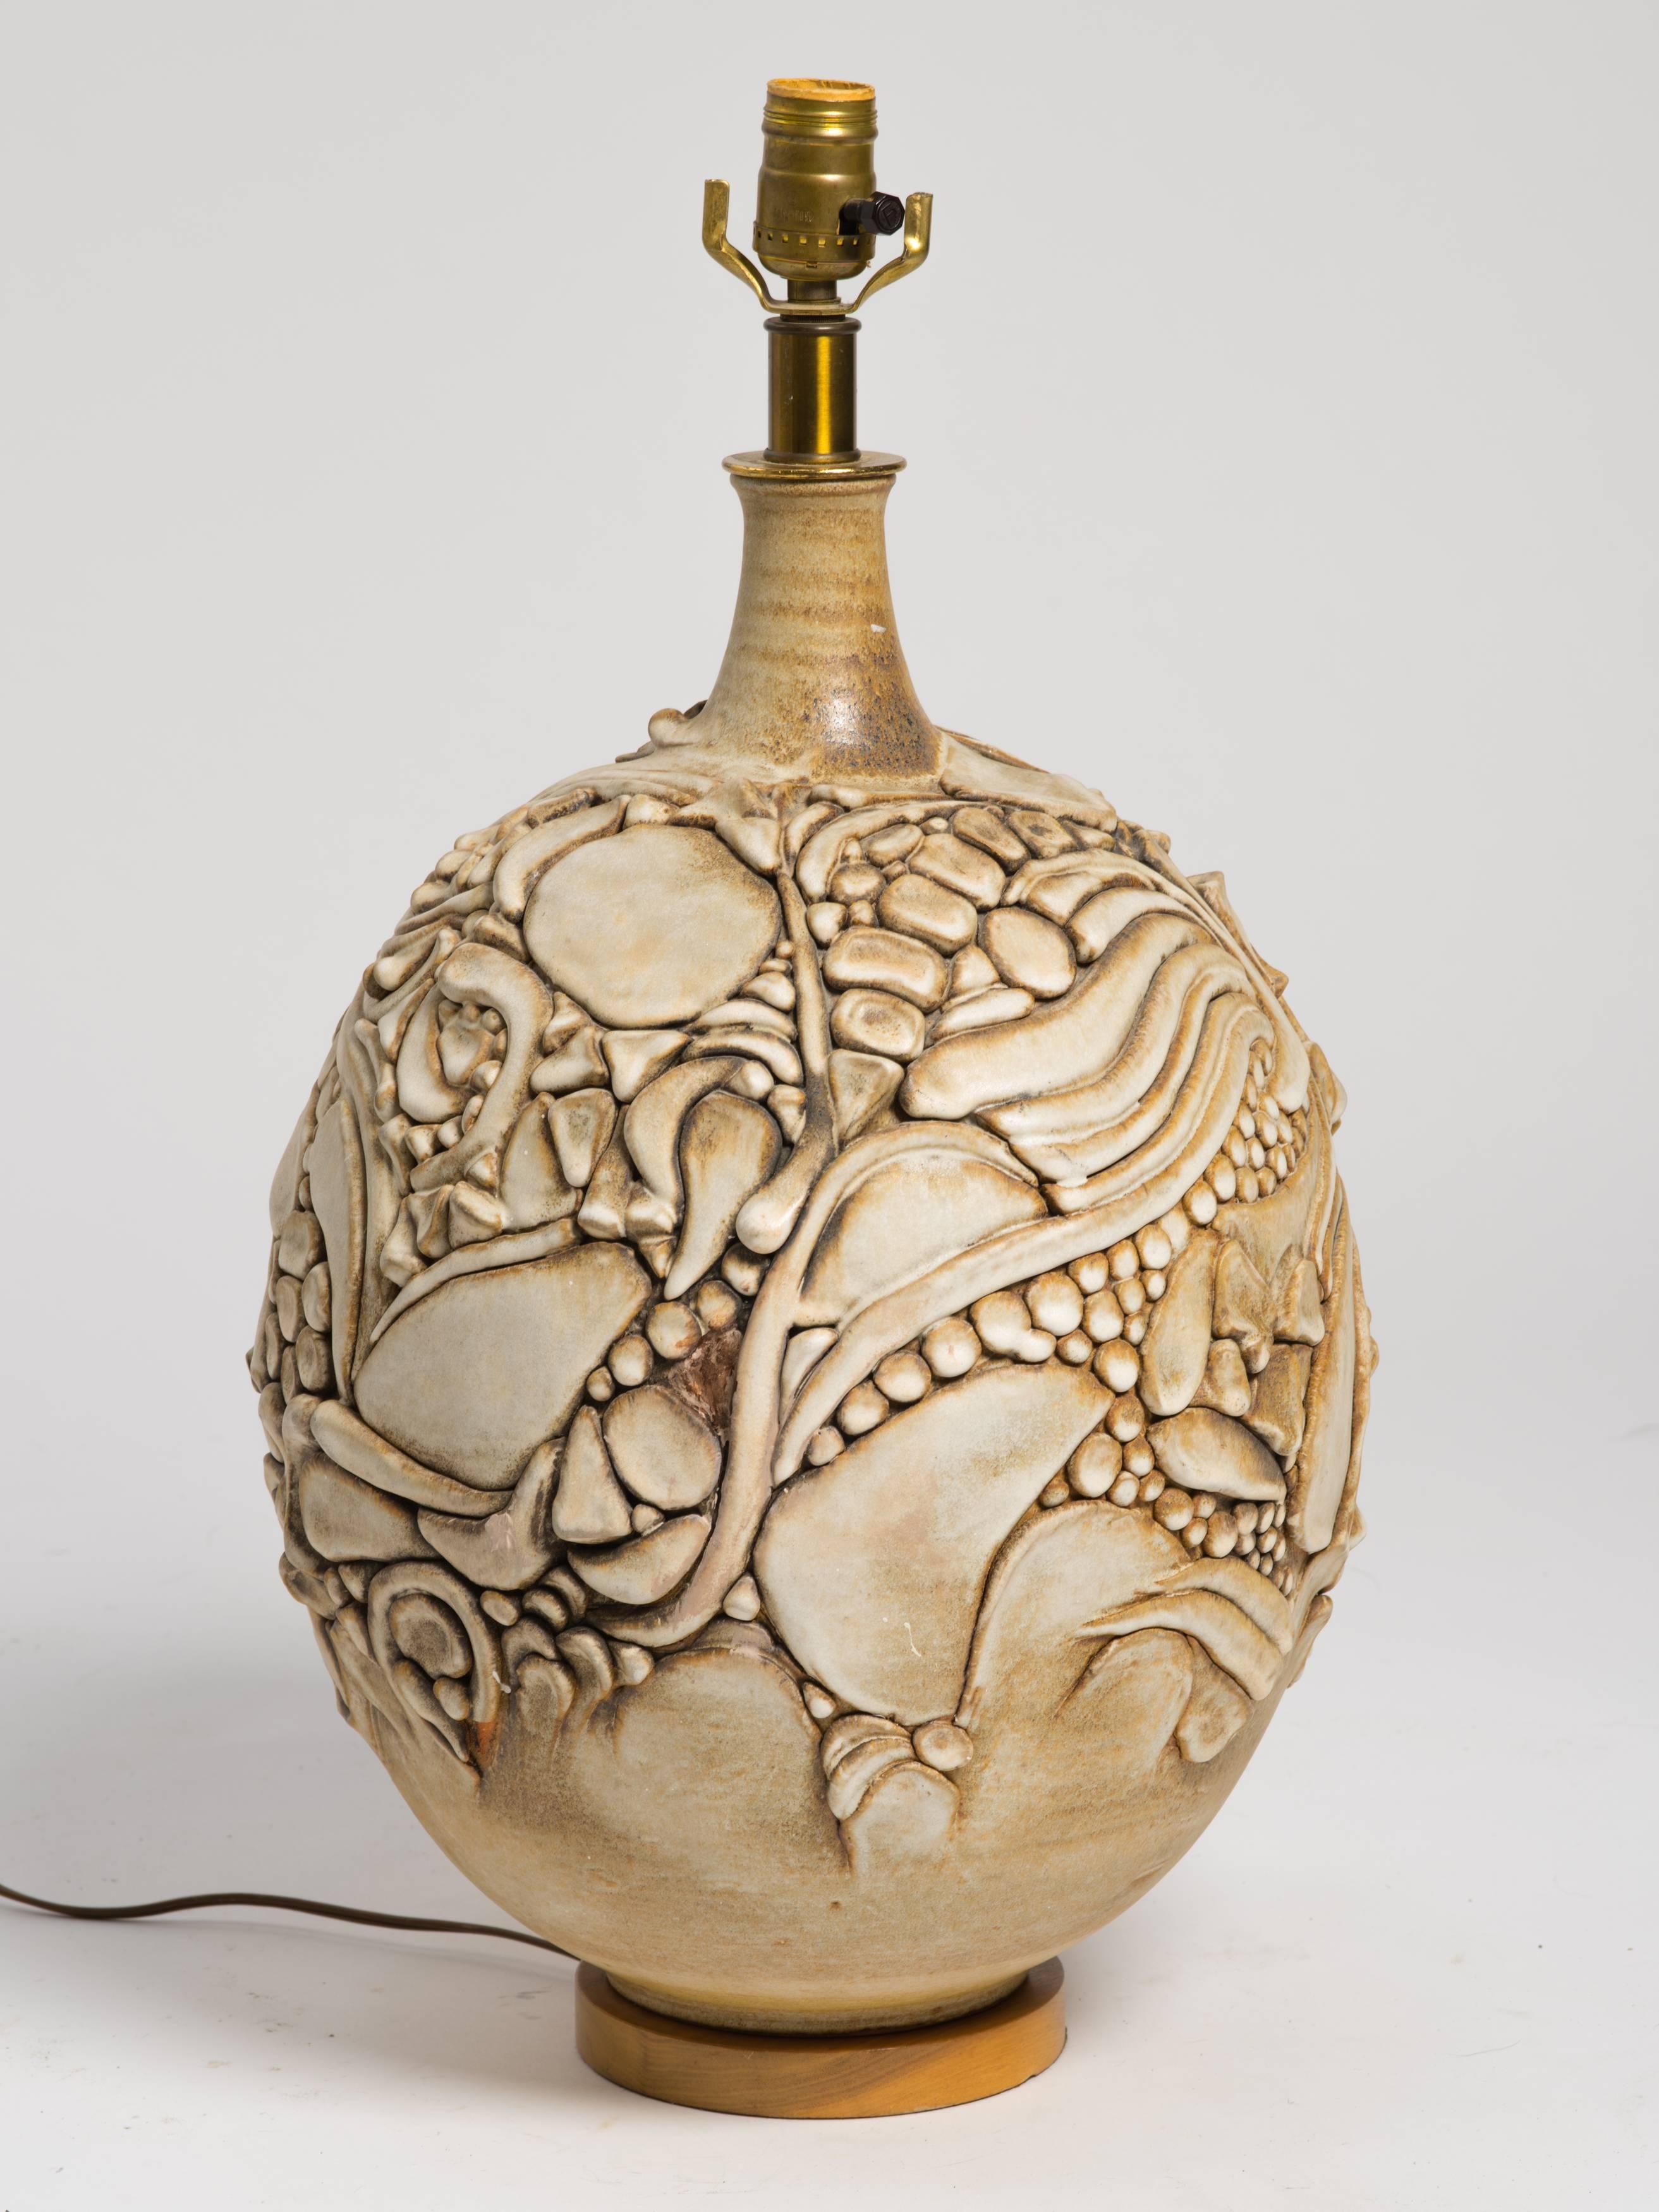 Sculptural ceramic table lamp by Lee Rosen for Design Technics.